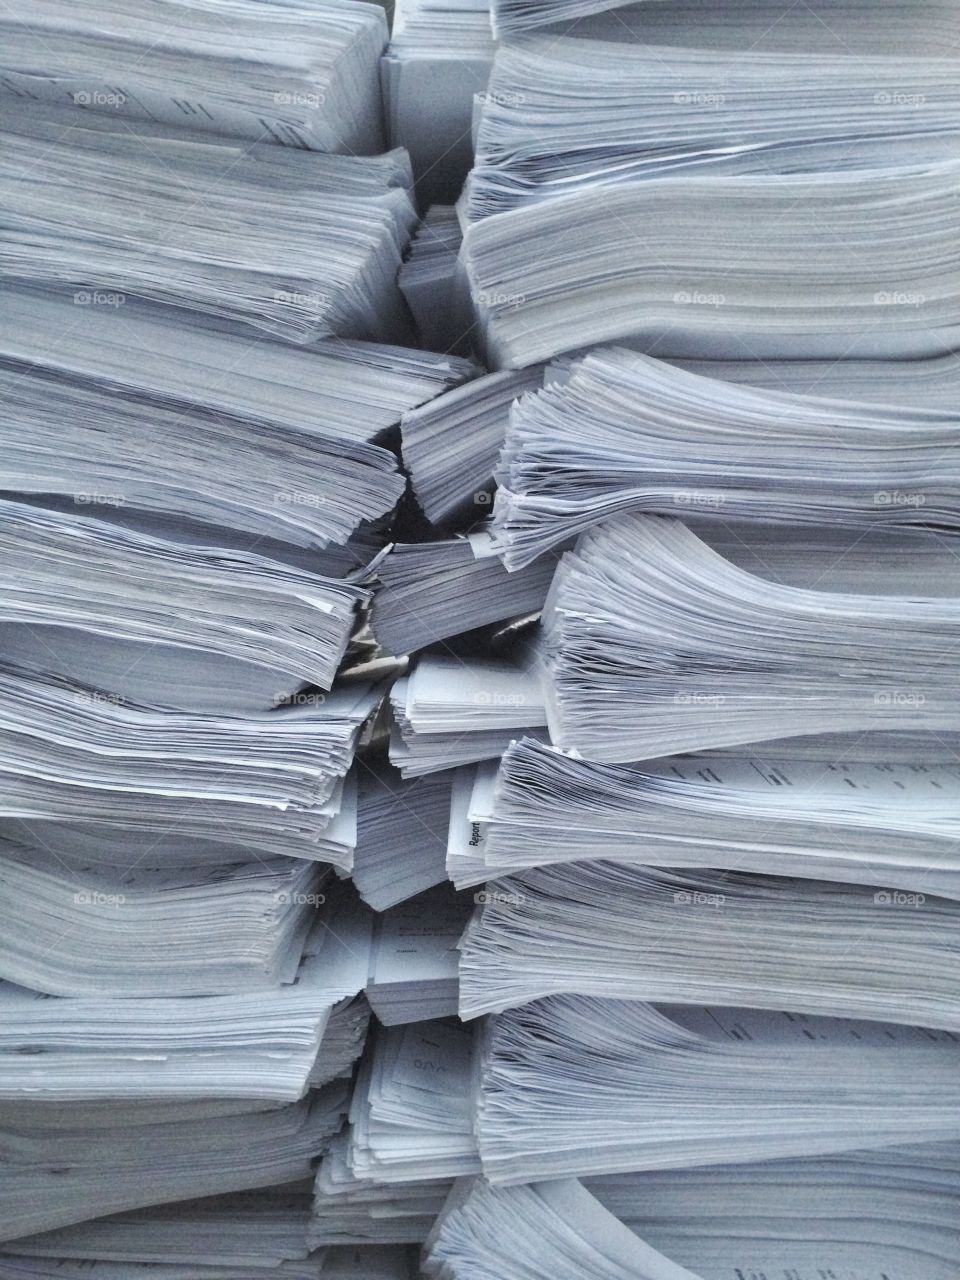 Paper stacks